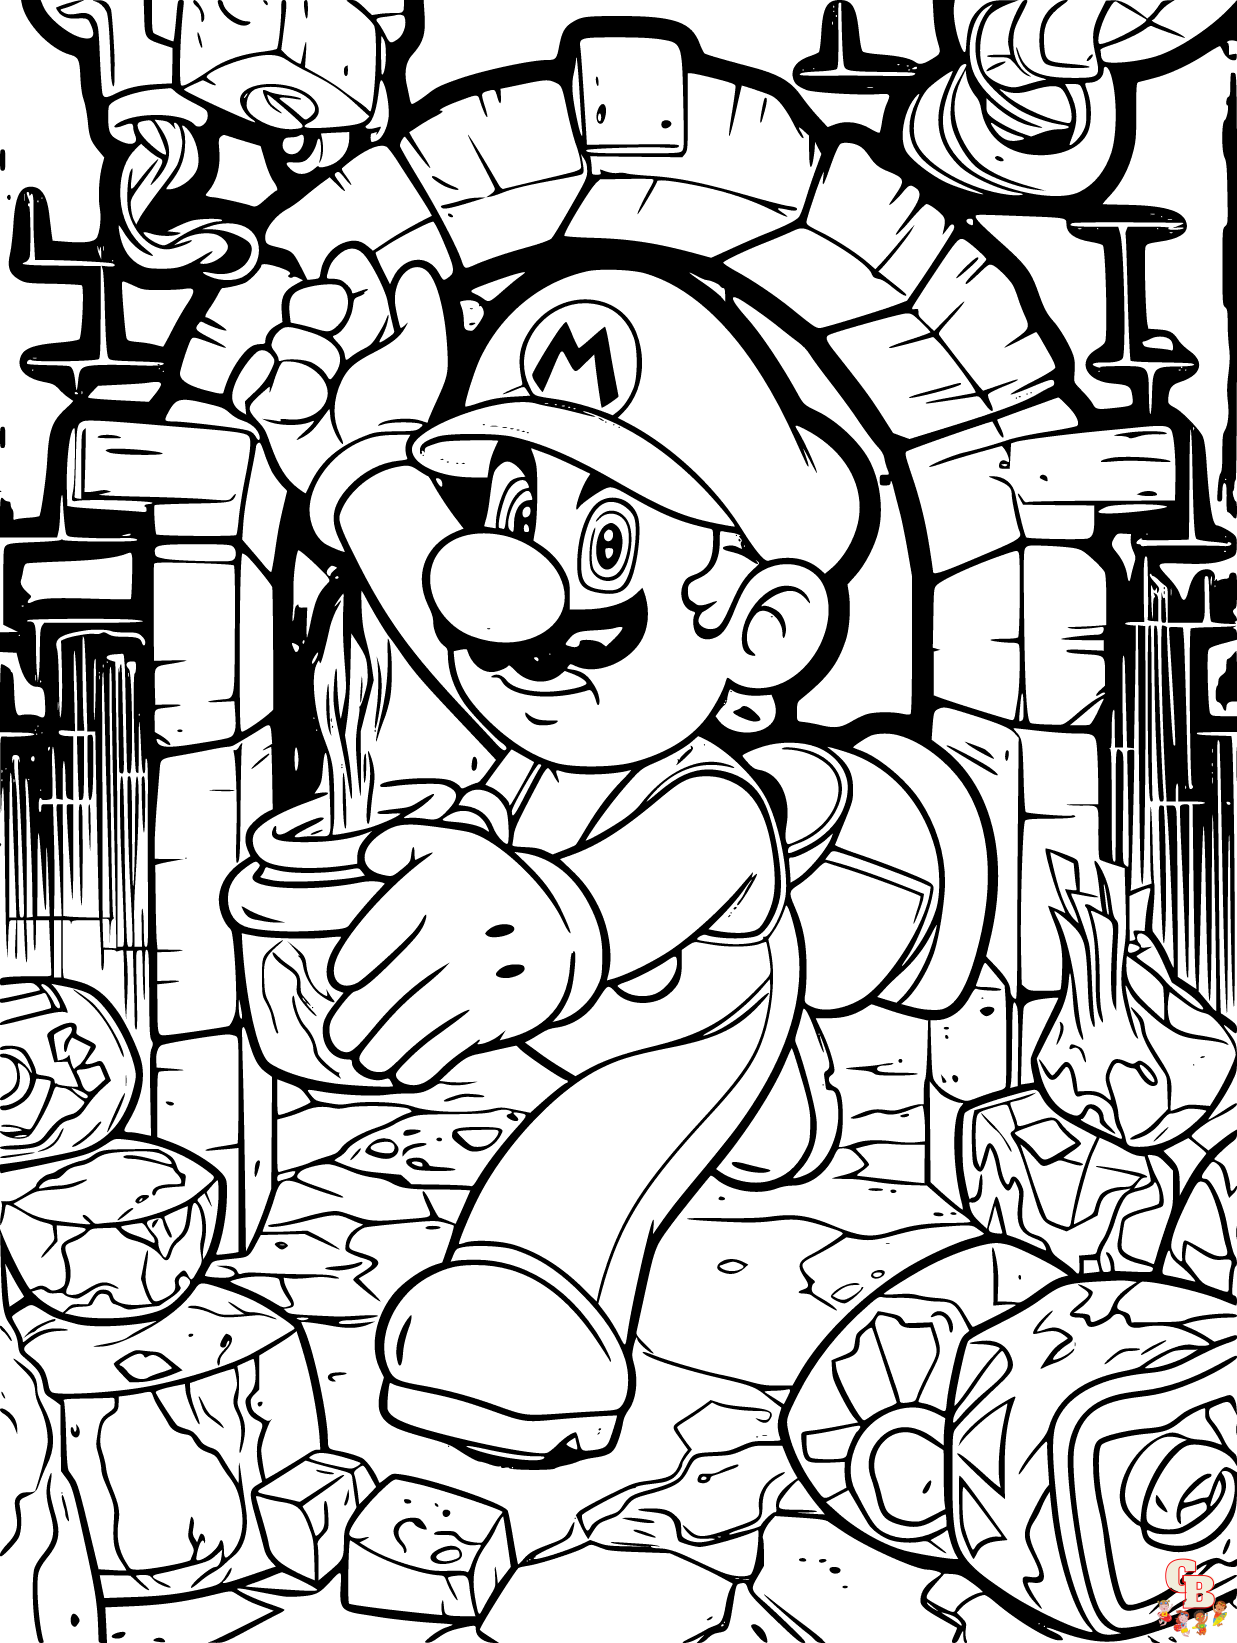 Dibujos de Super Mario para colorear faciles 1